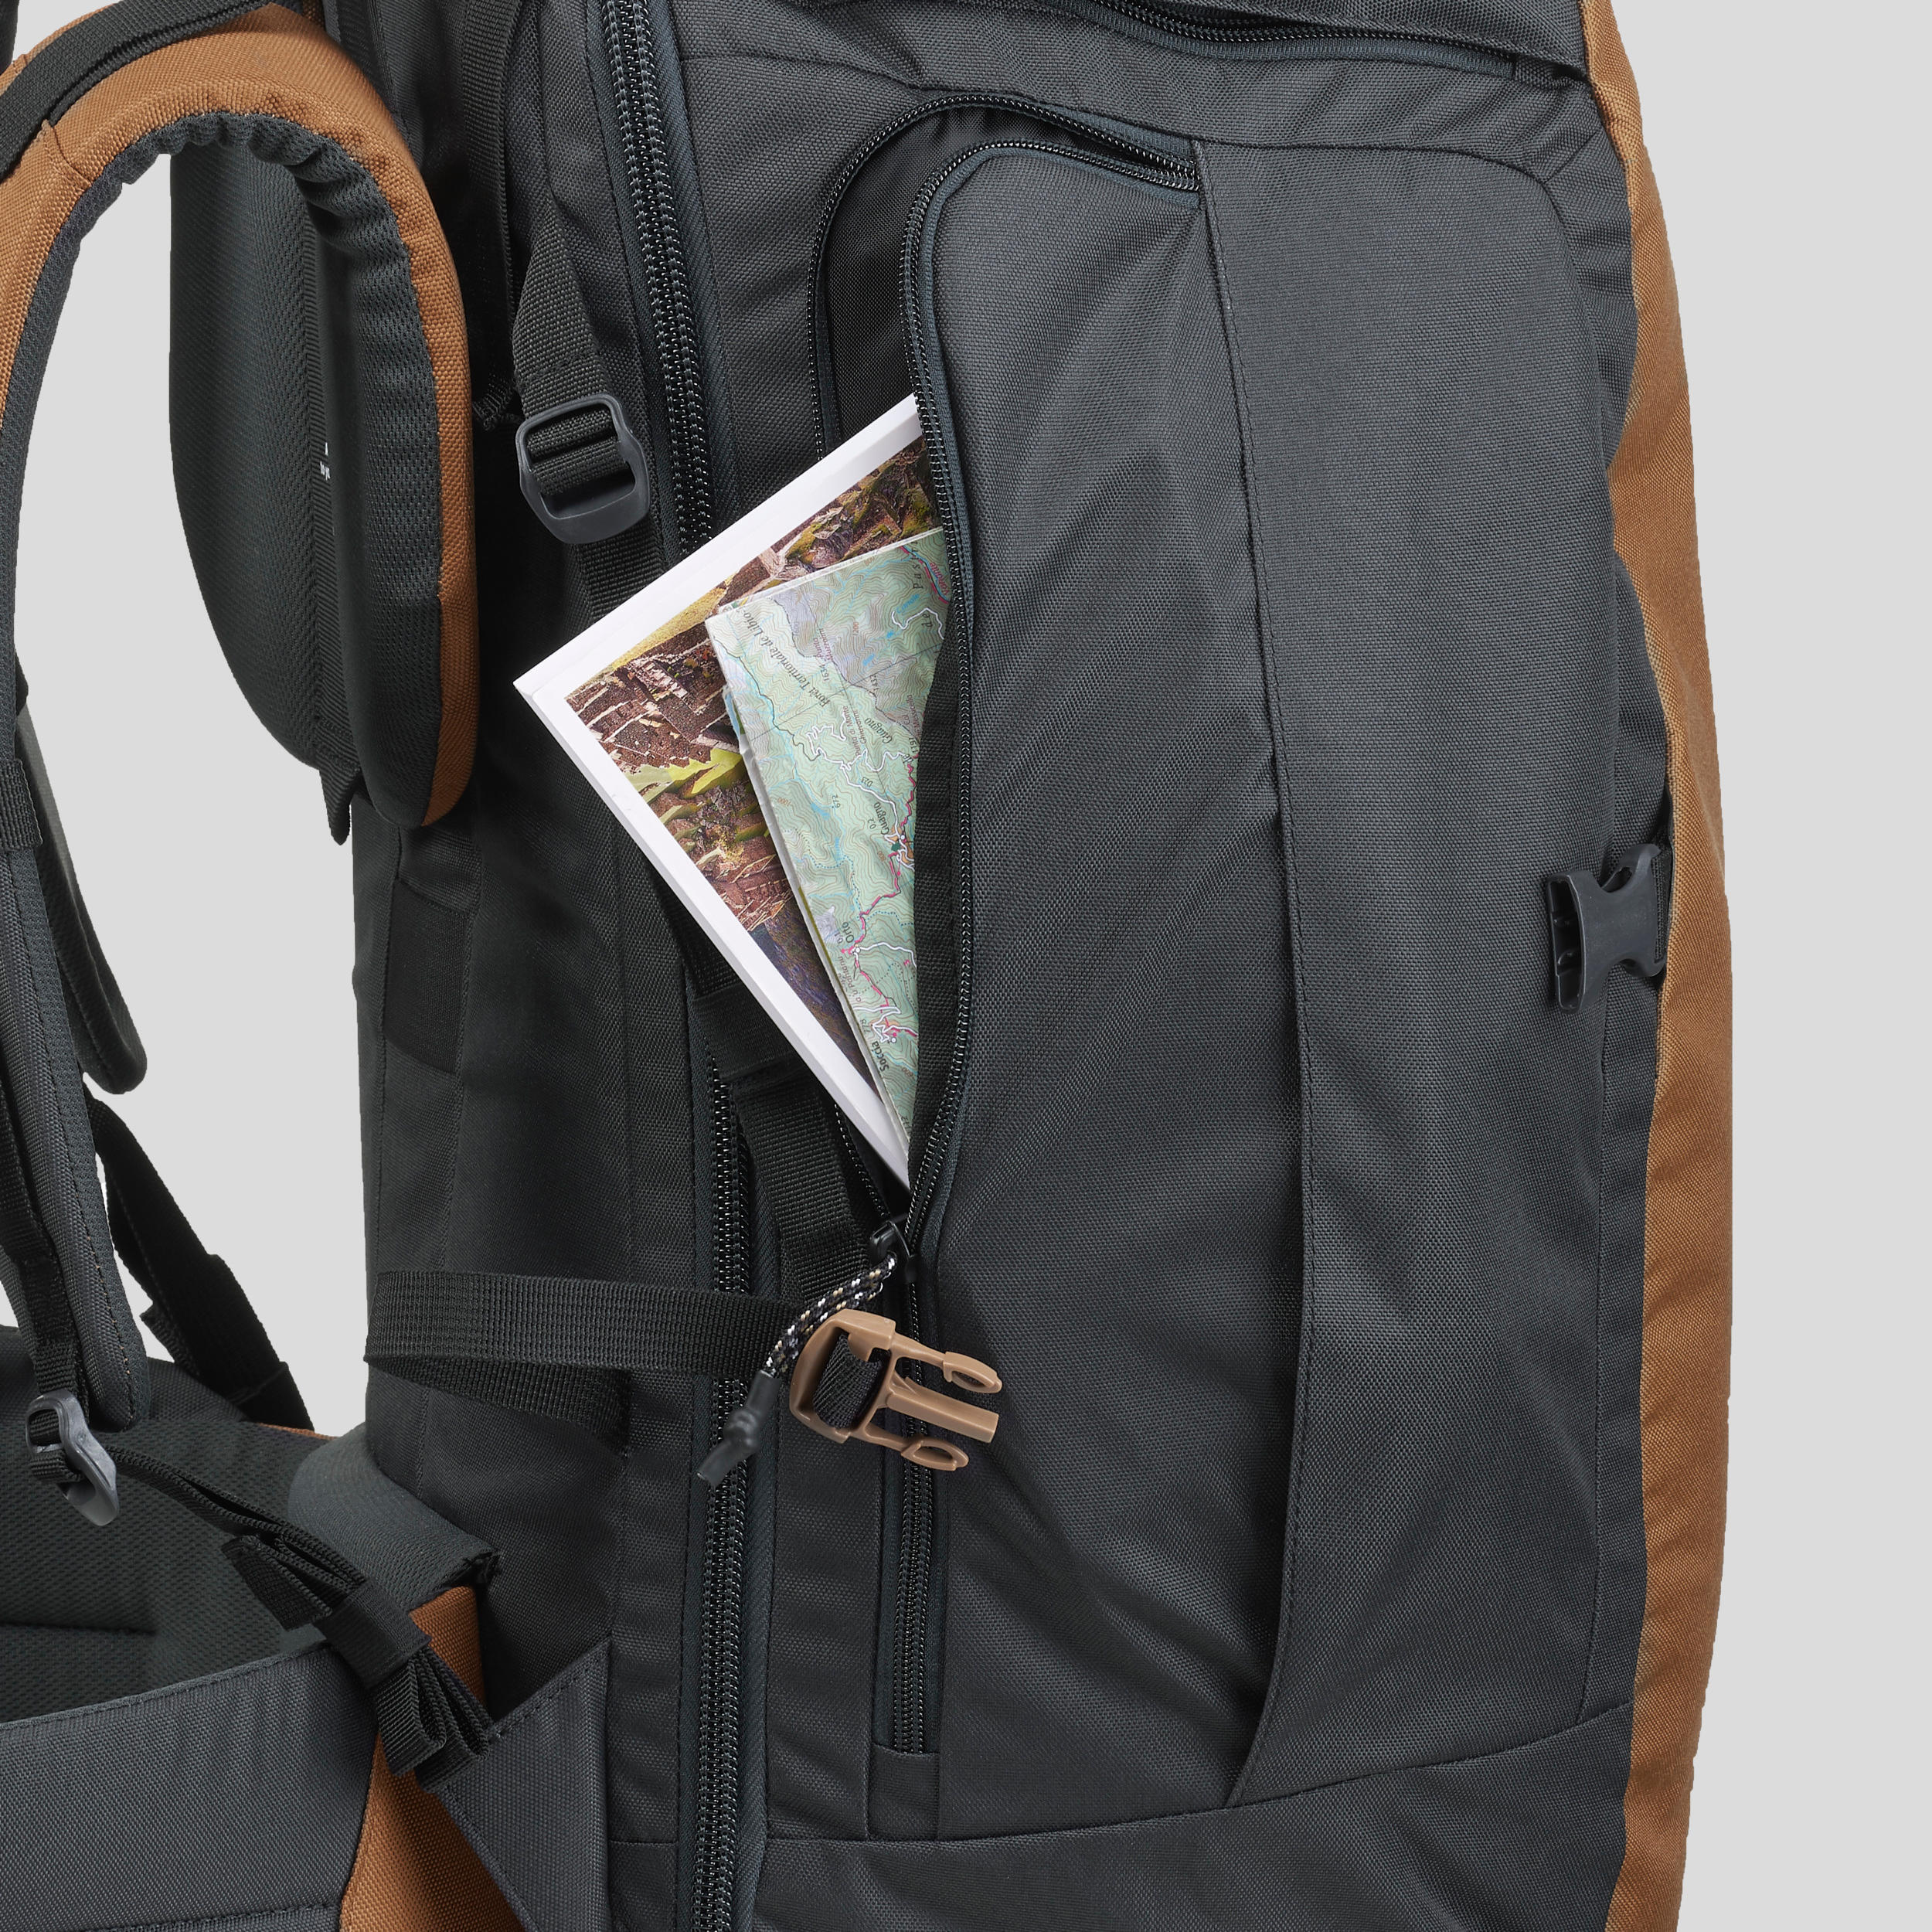 Travel backpack 60L - Travel 100 10/14